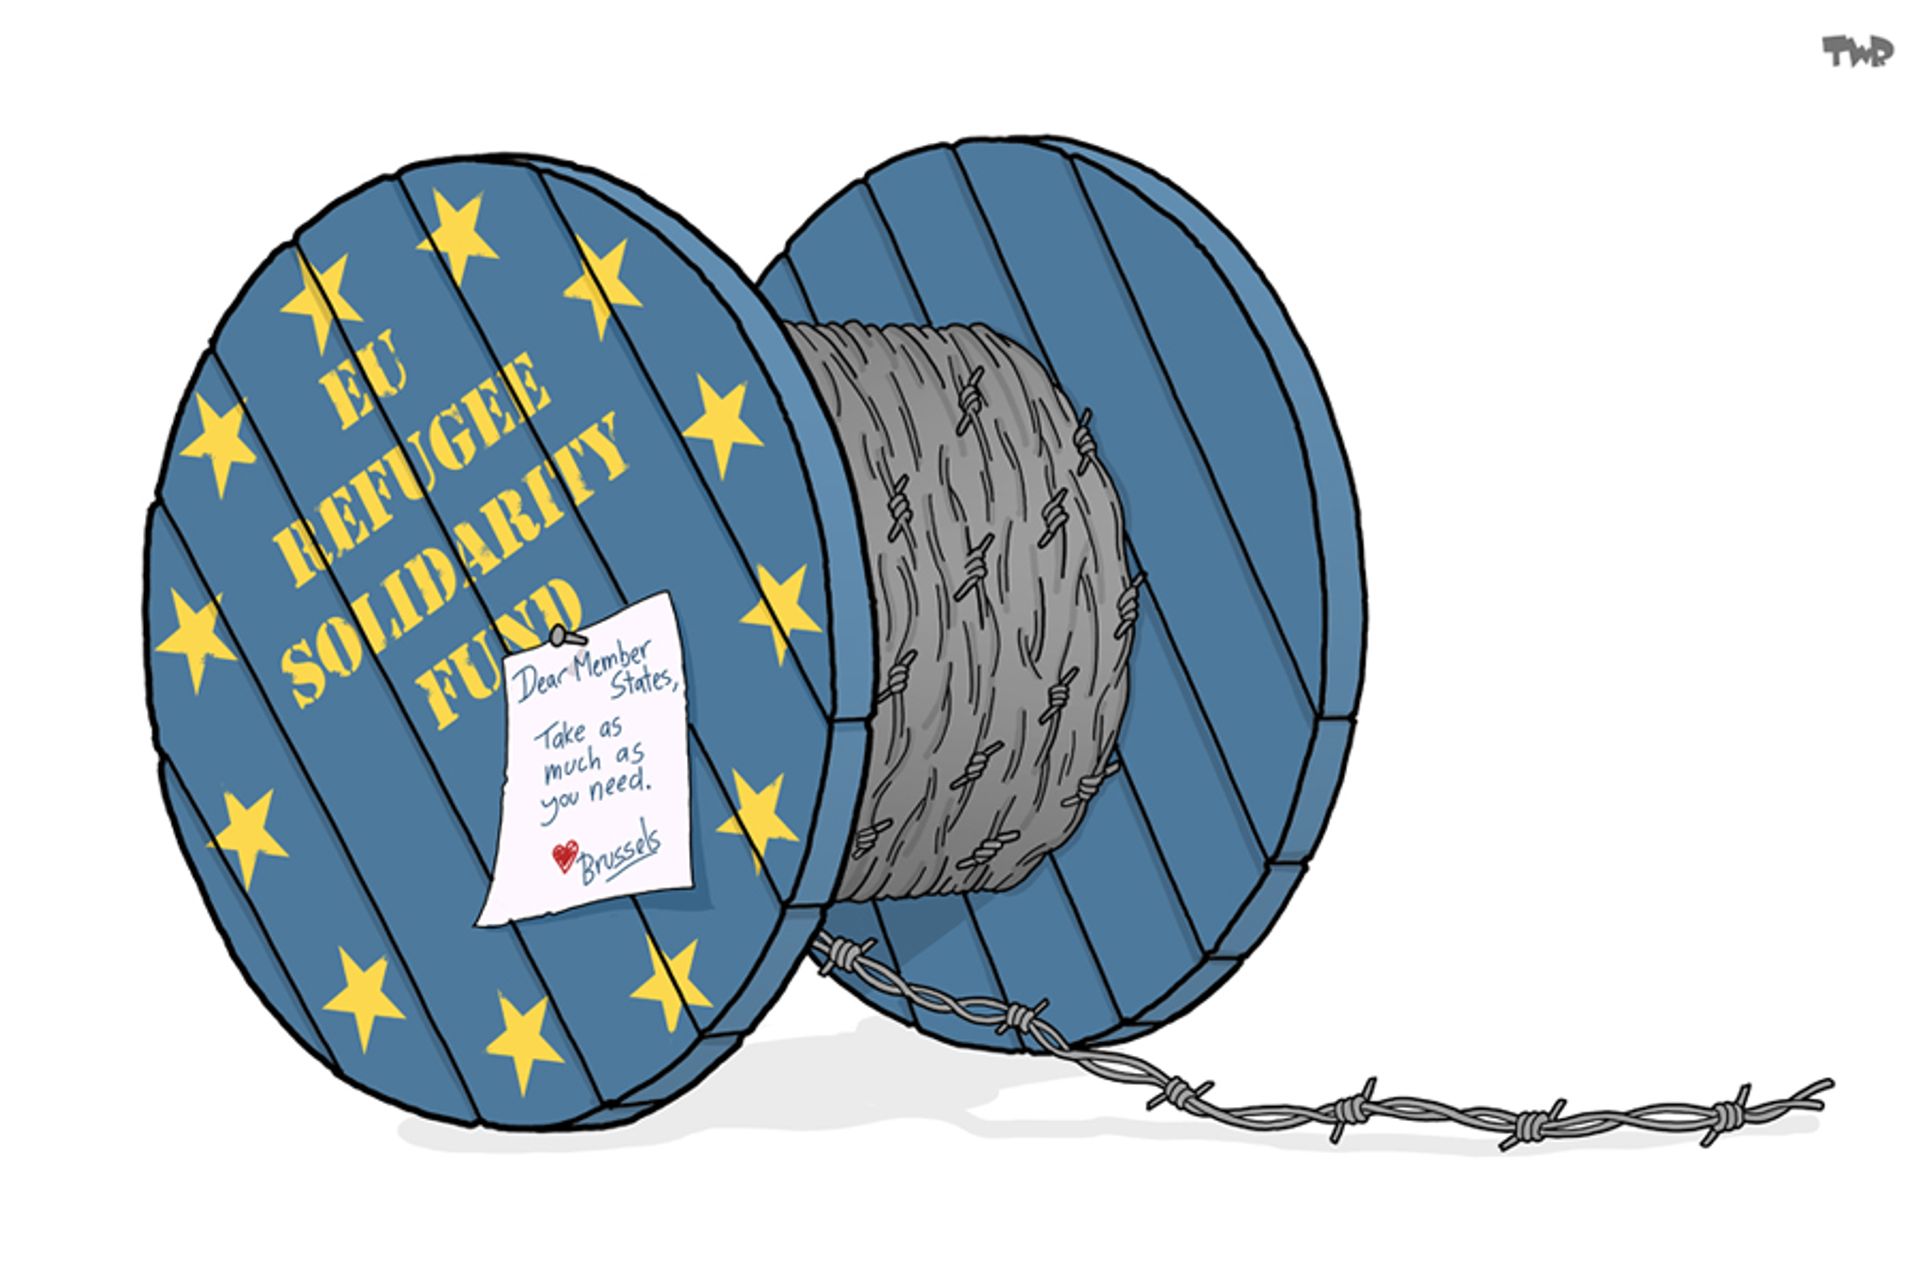 Refugees-European solidarity